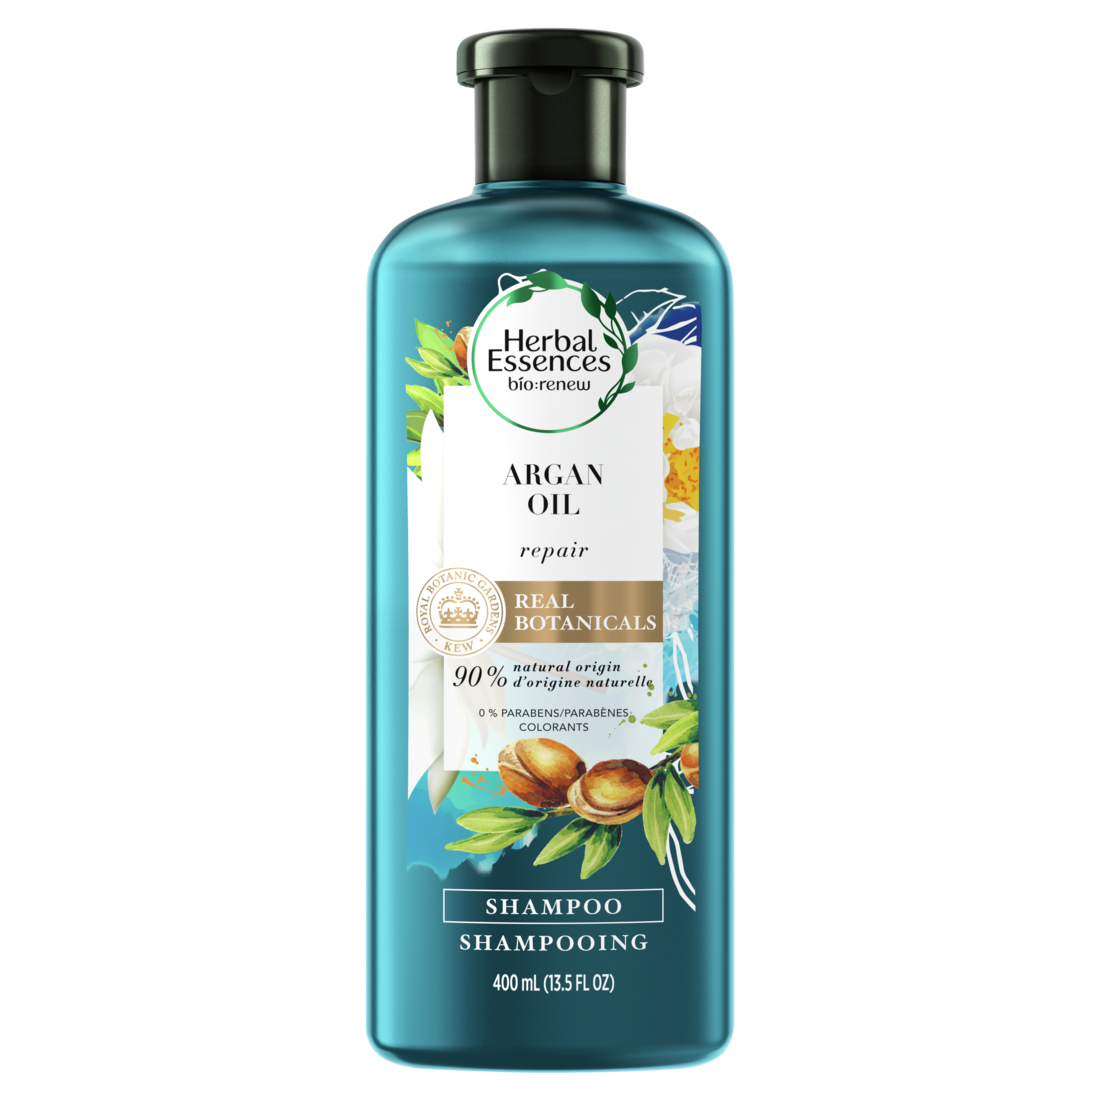 Herbal Essences bio:renew Argan Oil Of Morocco Repairing Color-Safe Shampoo - 13.5 oz/6pk